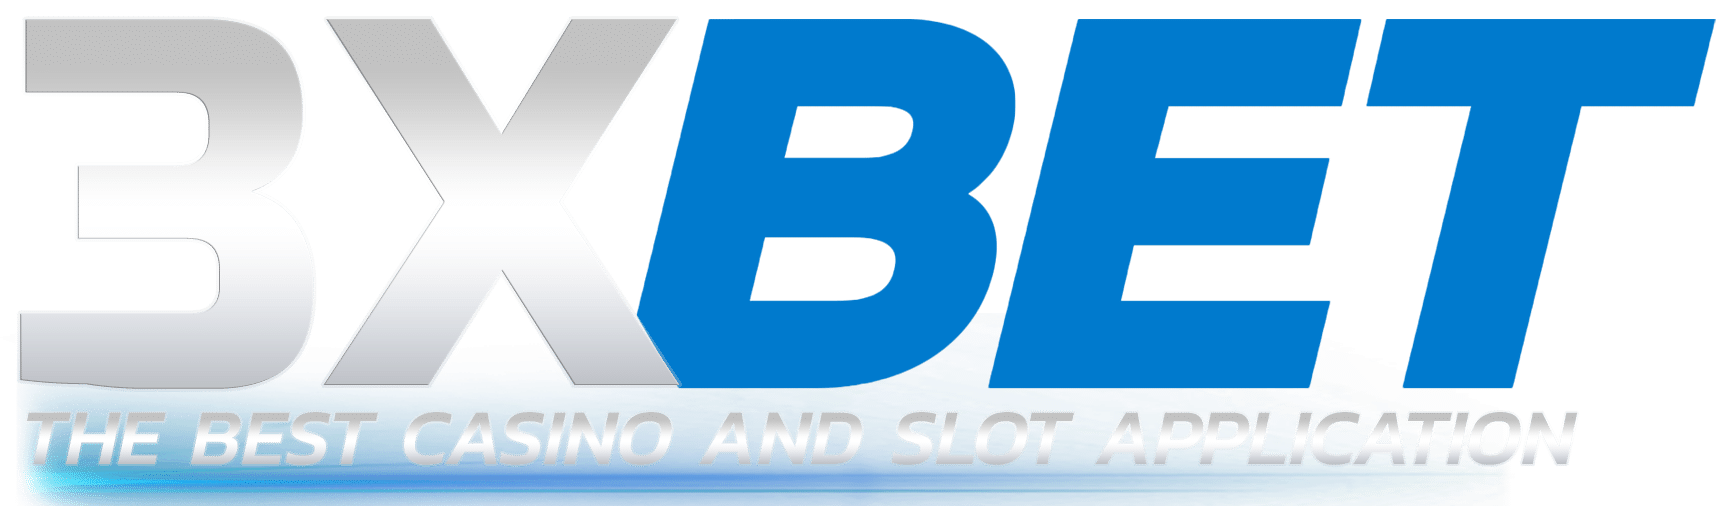 3xBET logo1